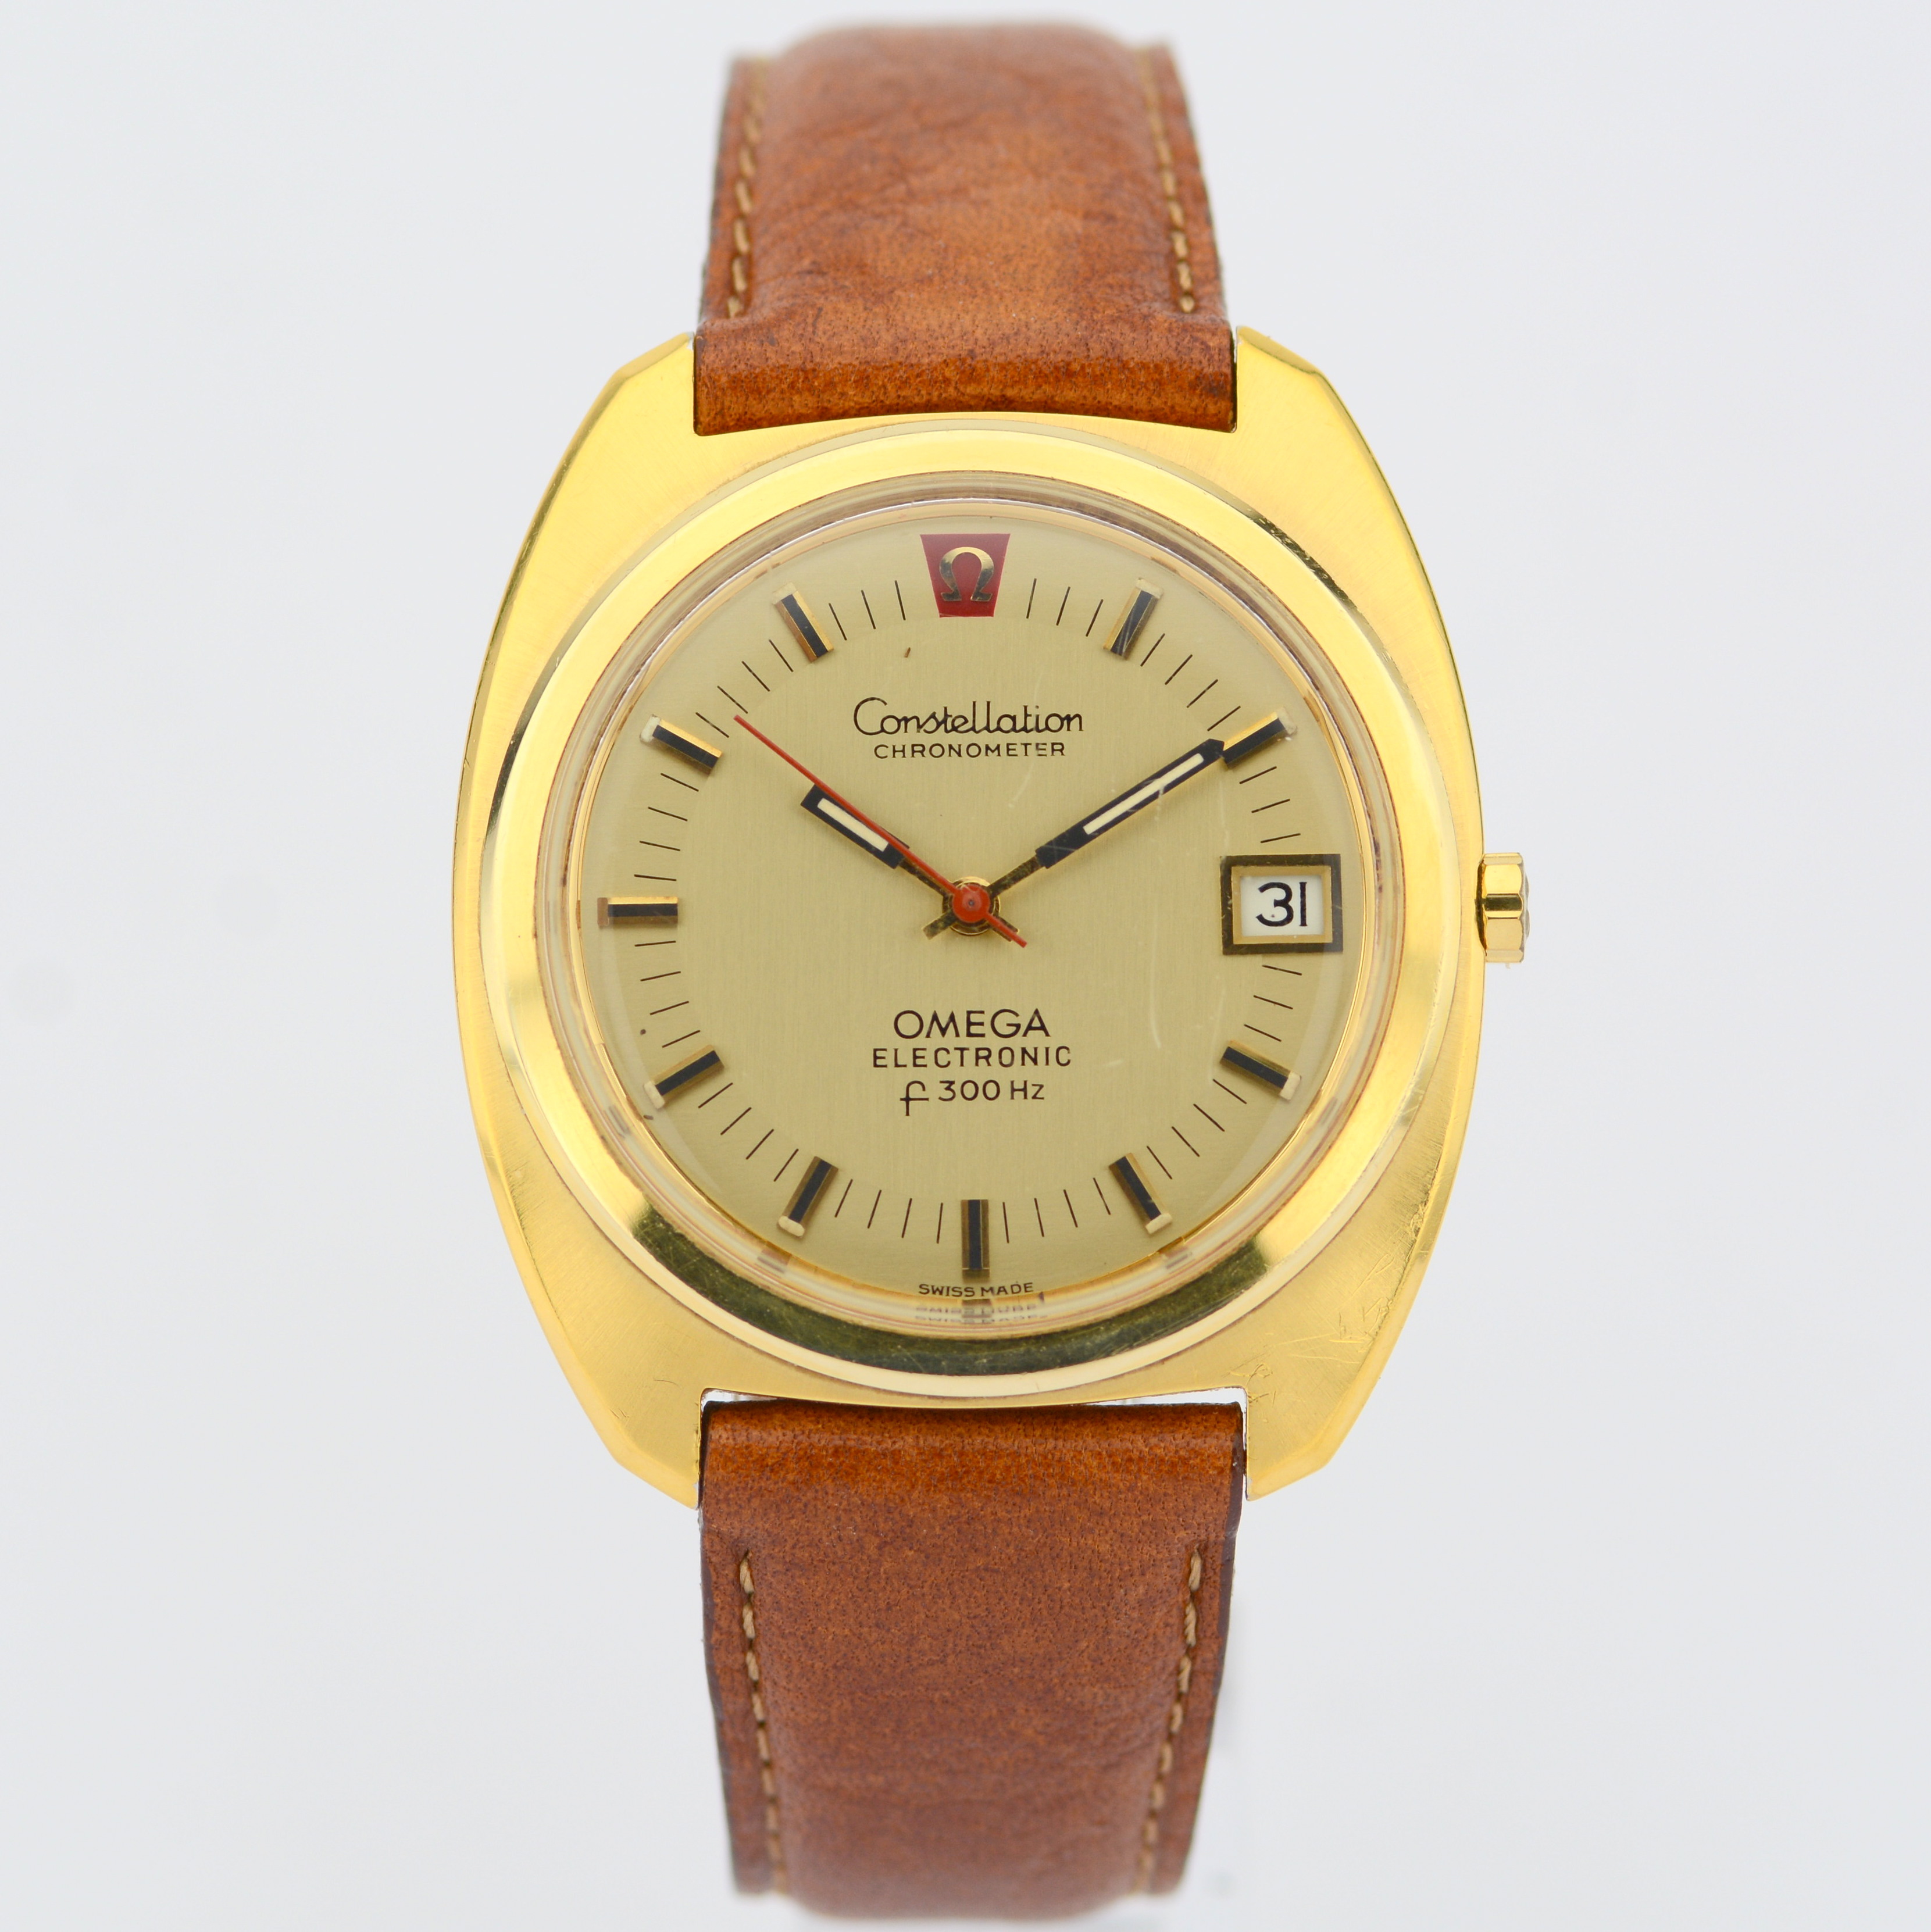 Omega / Constellation Chronometer Electronic f300Hz - Gentlmen's Gold/Steel Wrist Watch - Image 2 of 6